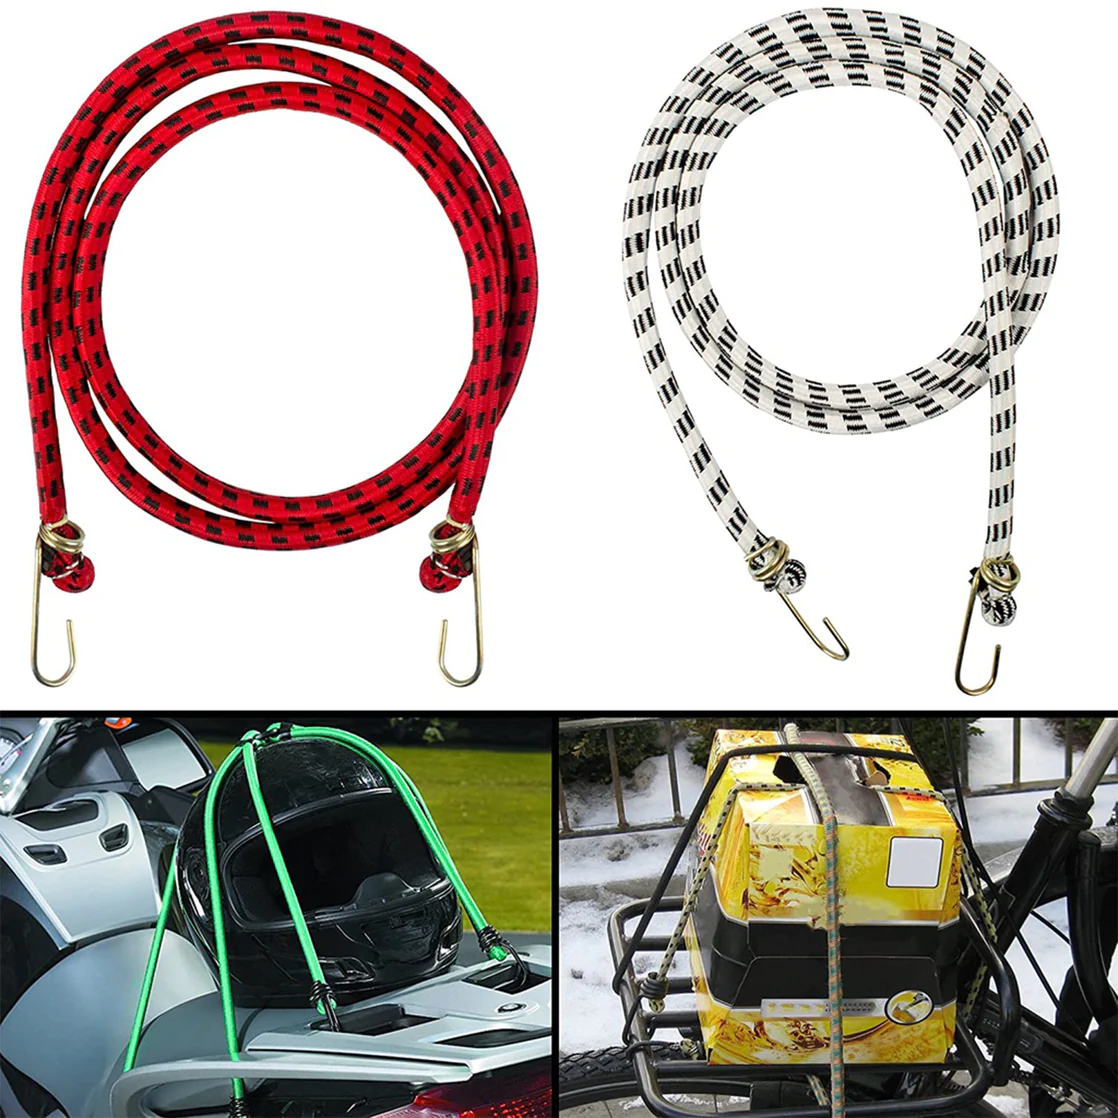 Pack of 3 - Bungee Ropes With Hooks - Elastic Nylon Luggage Ropes